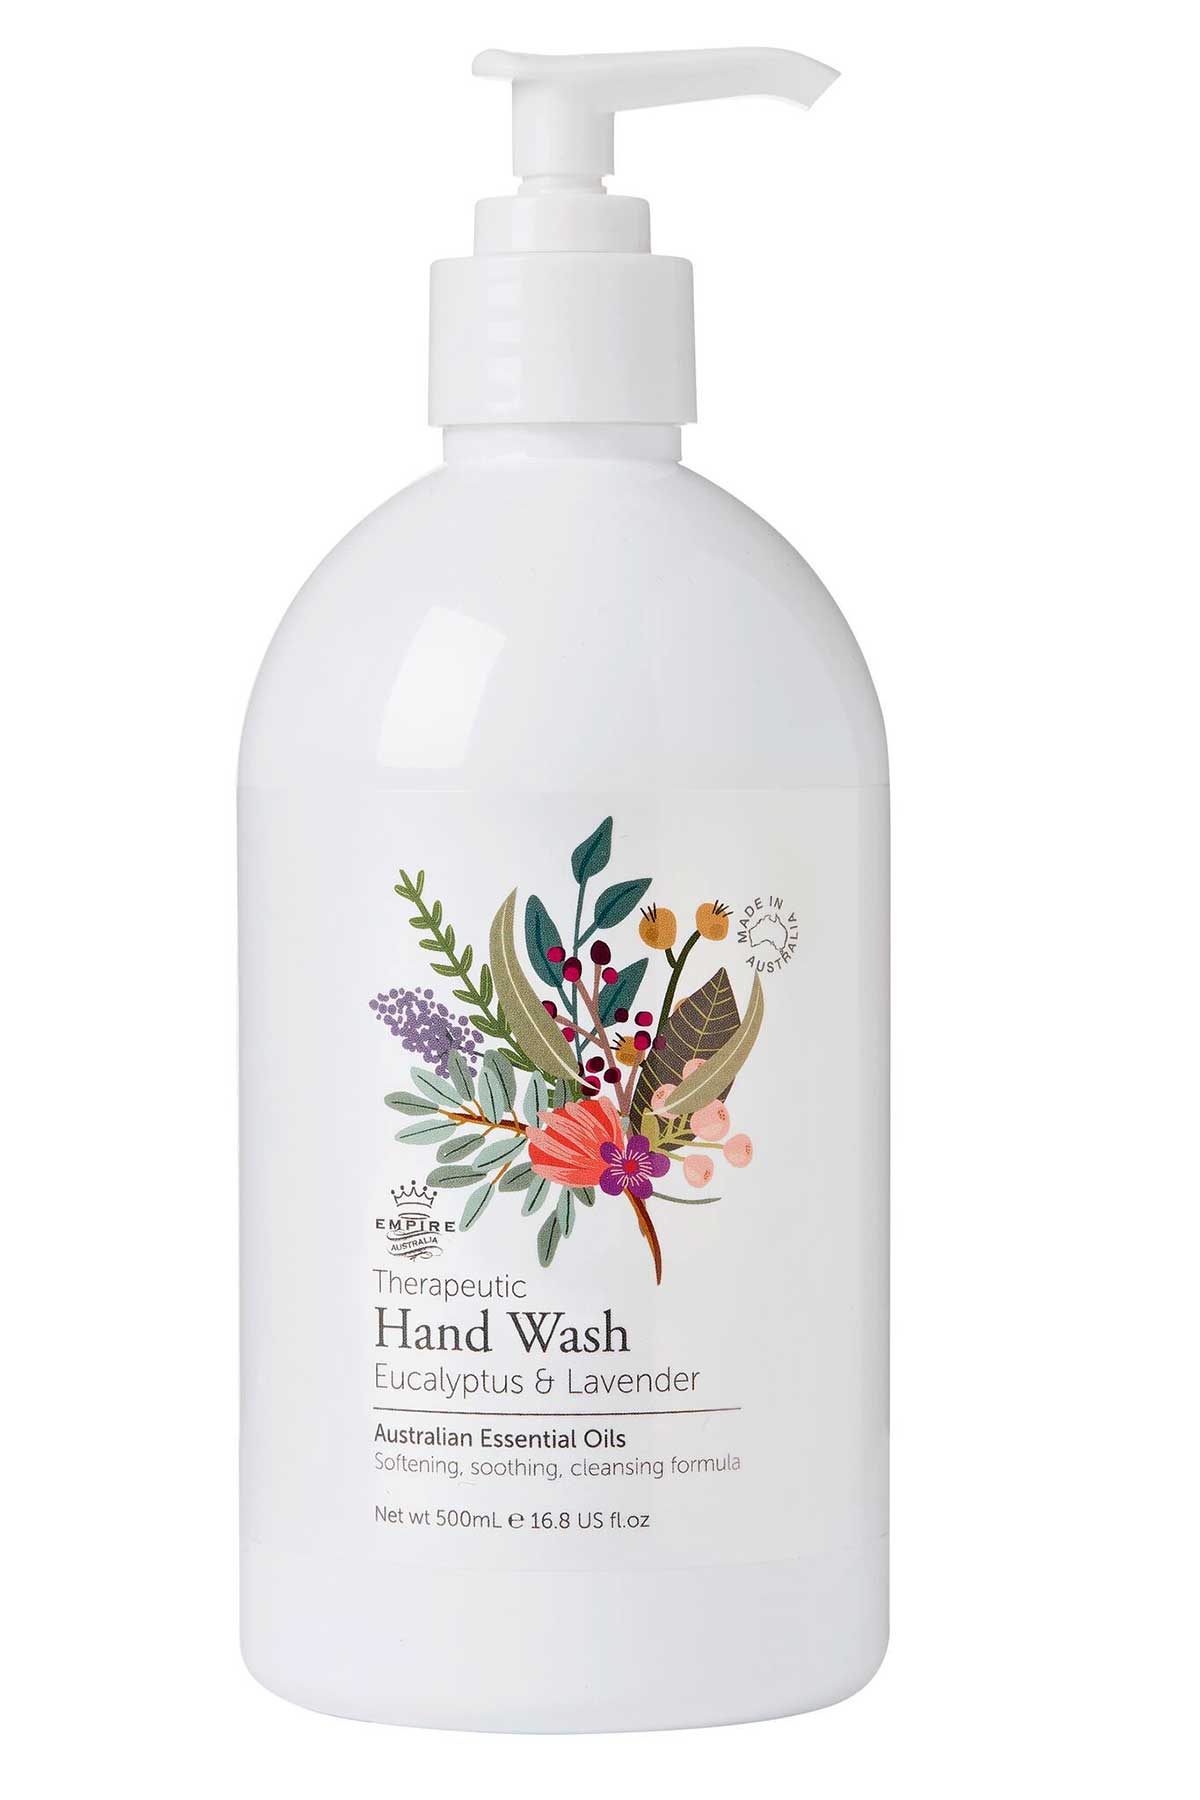 Empire Australia Therapeutic hand wash eucalyptus & lavender